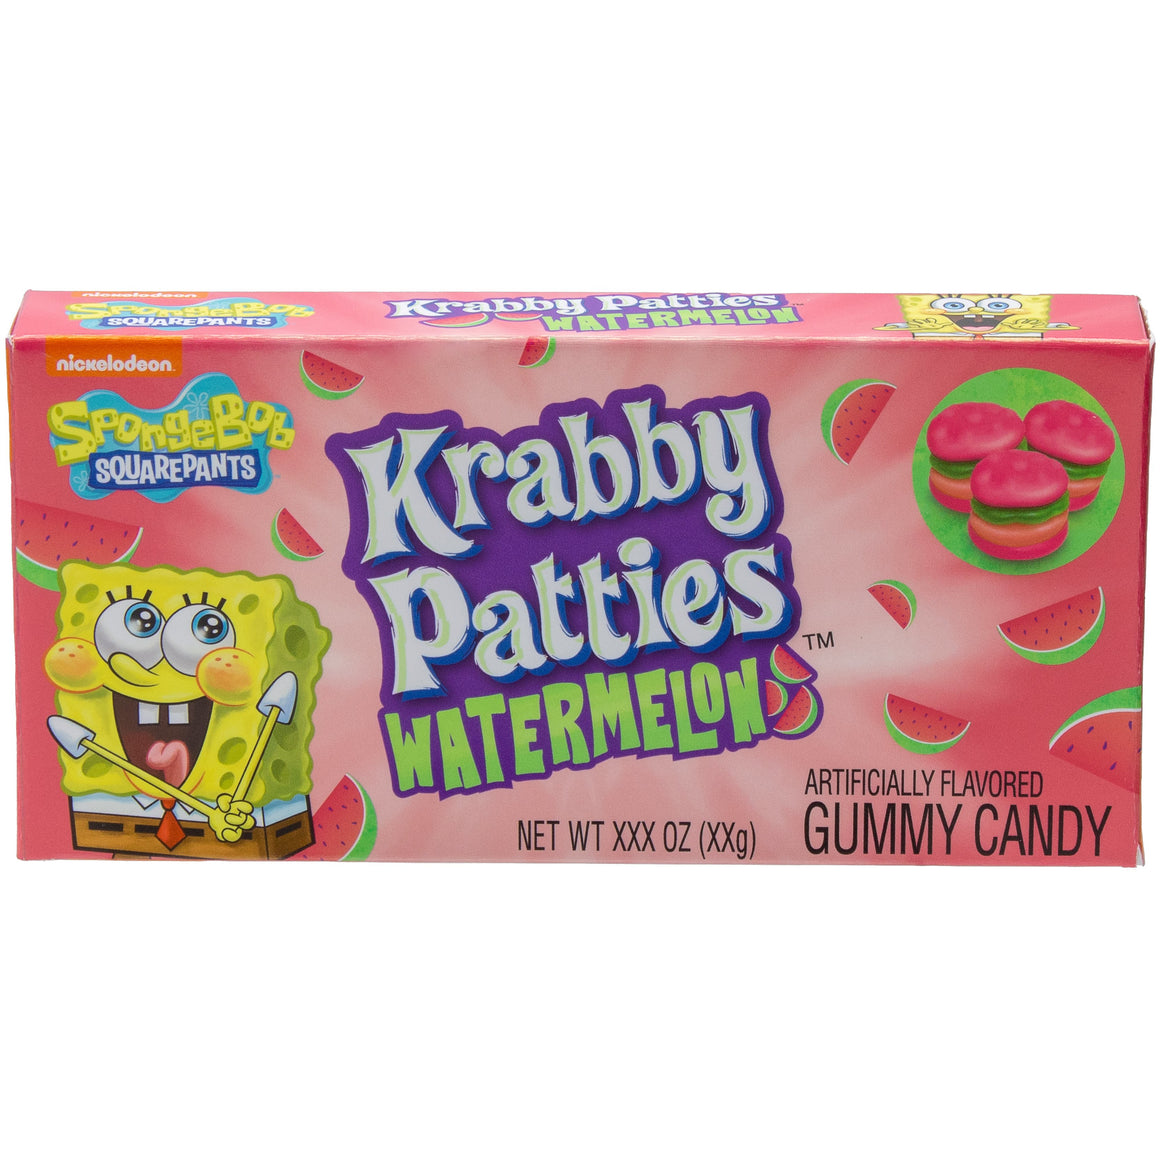 are gummy krabby patties kosher gelatin